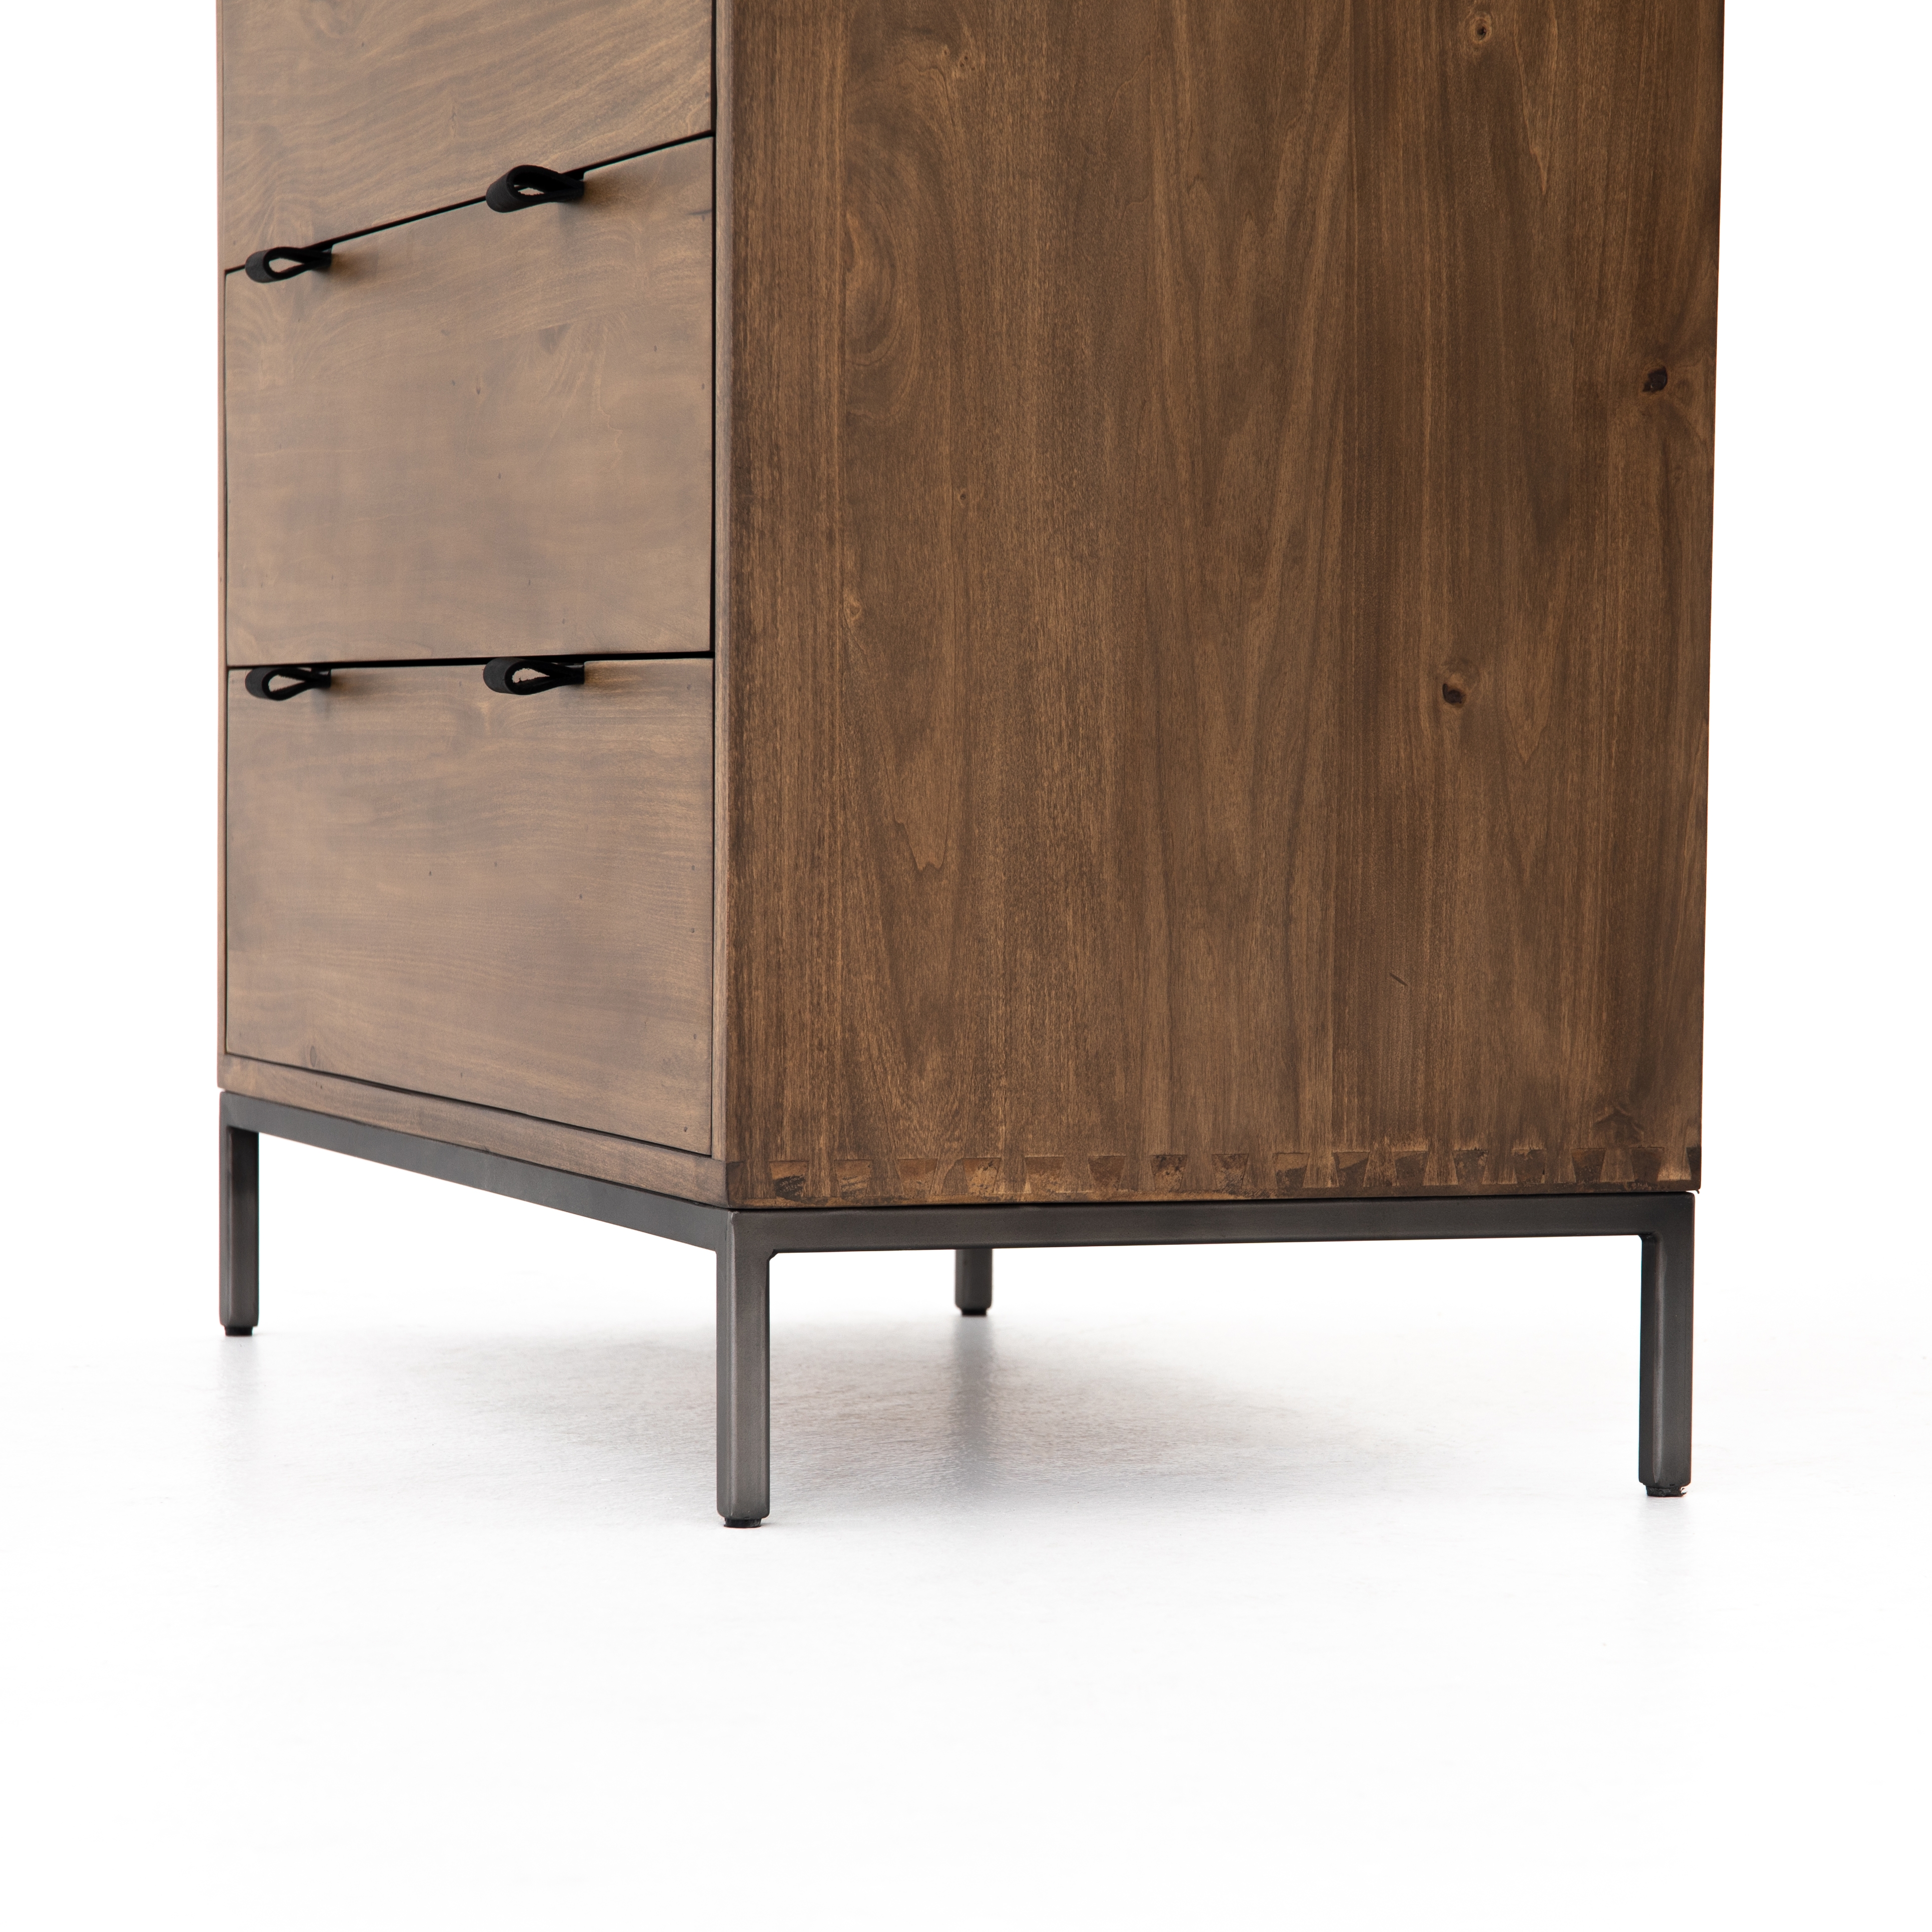 Trey 5 Drawer Dresser-Auburn Poplar - Image 3